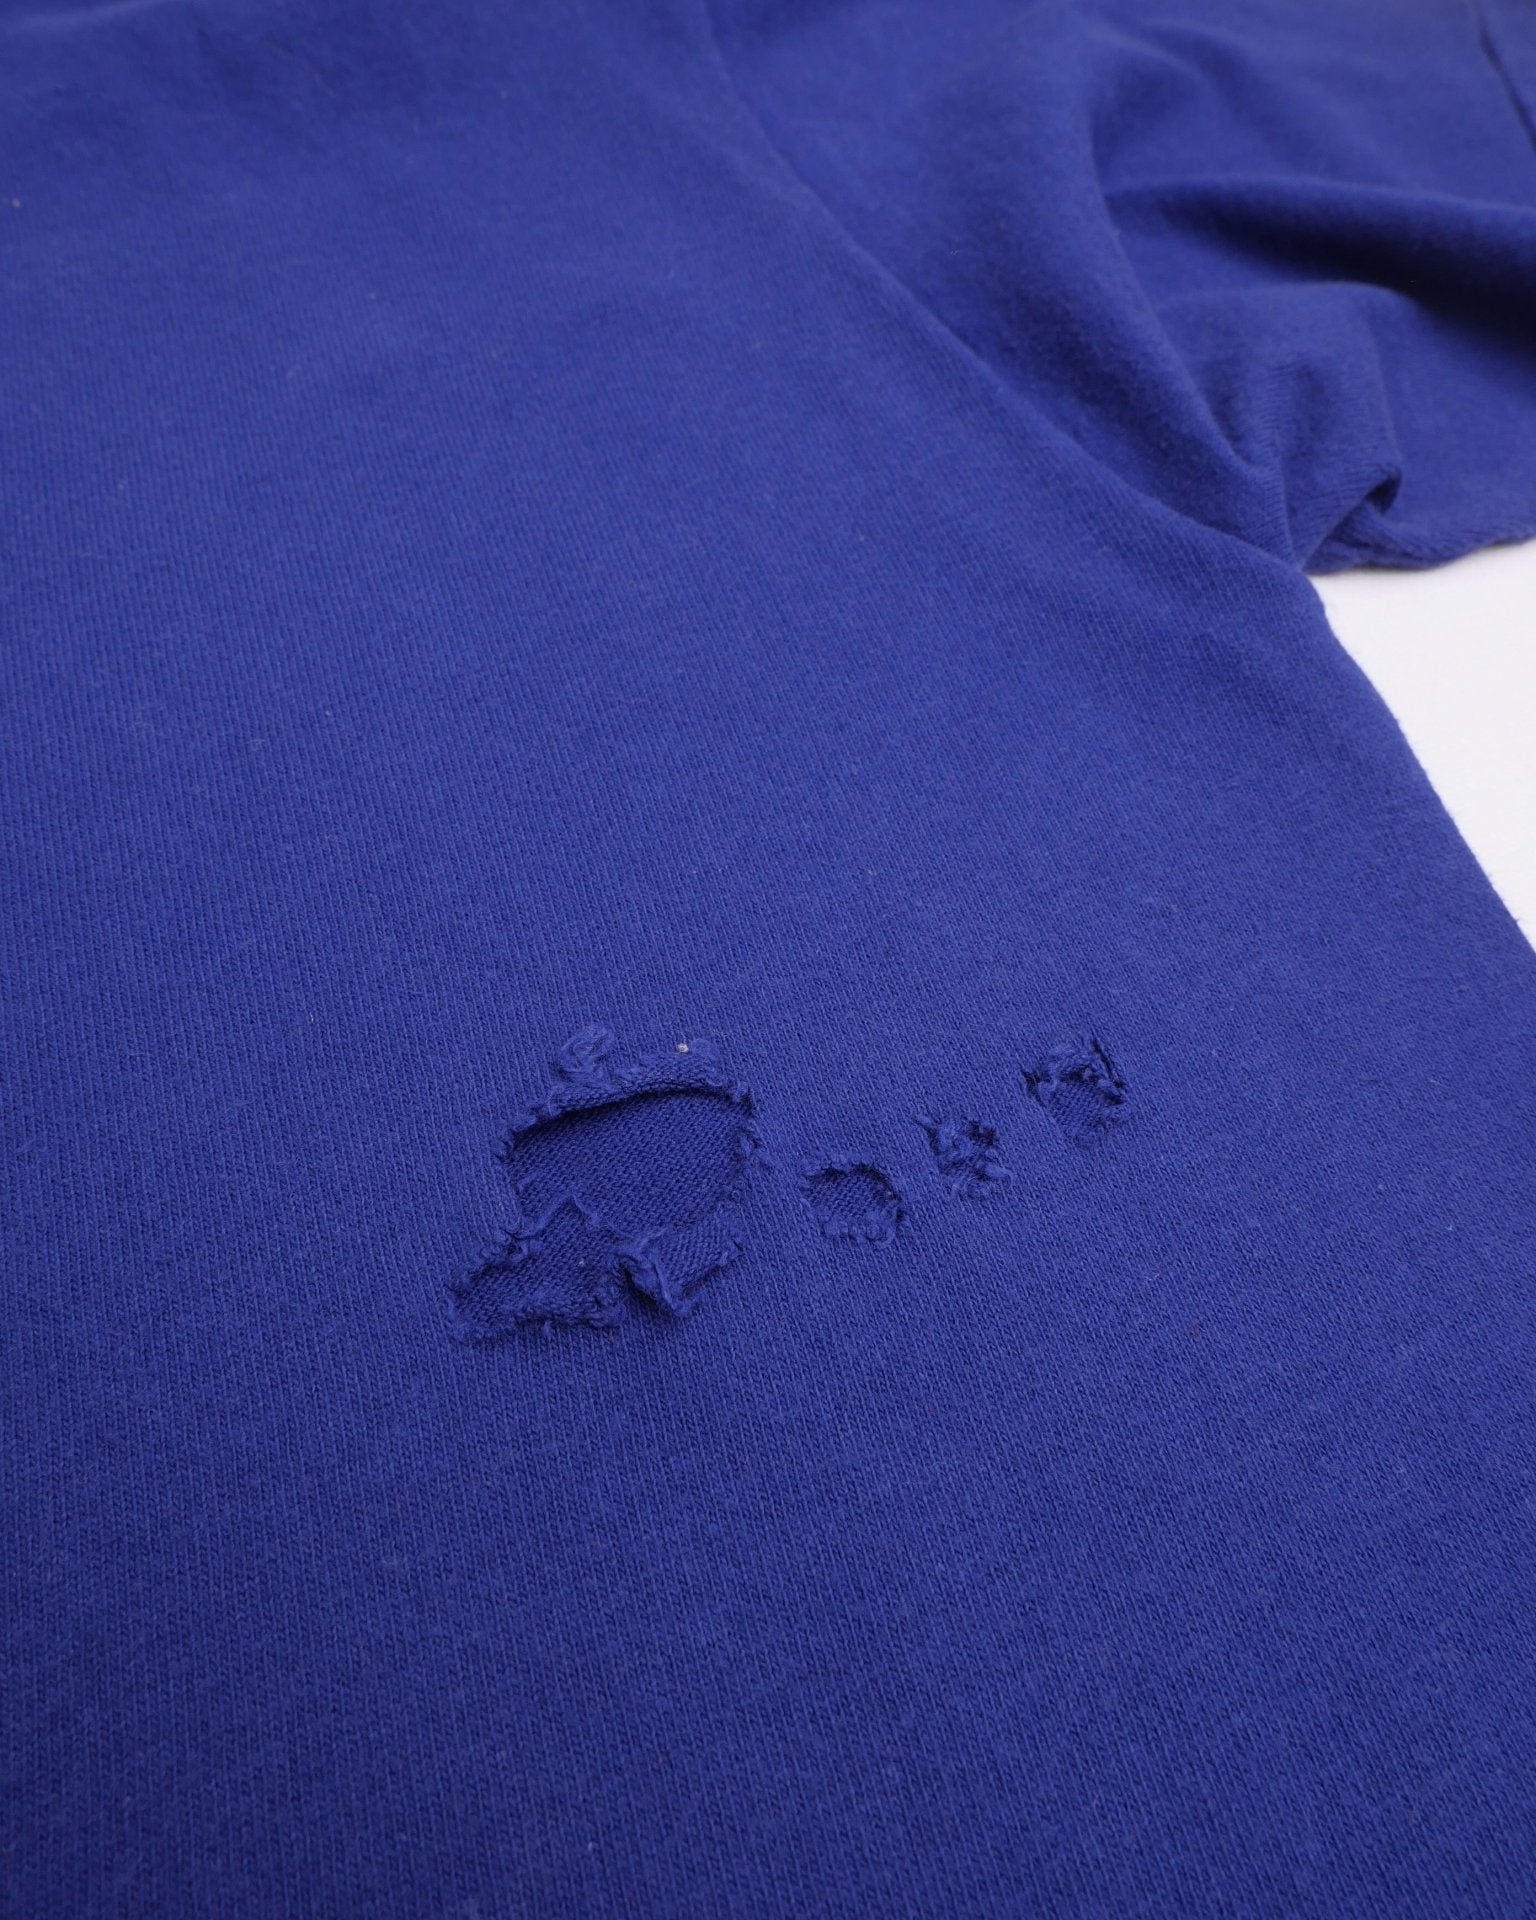 Champion embroidered Logo blue Vintage Shirt - Peeces